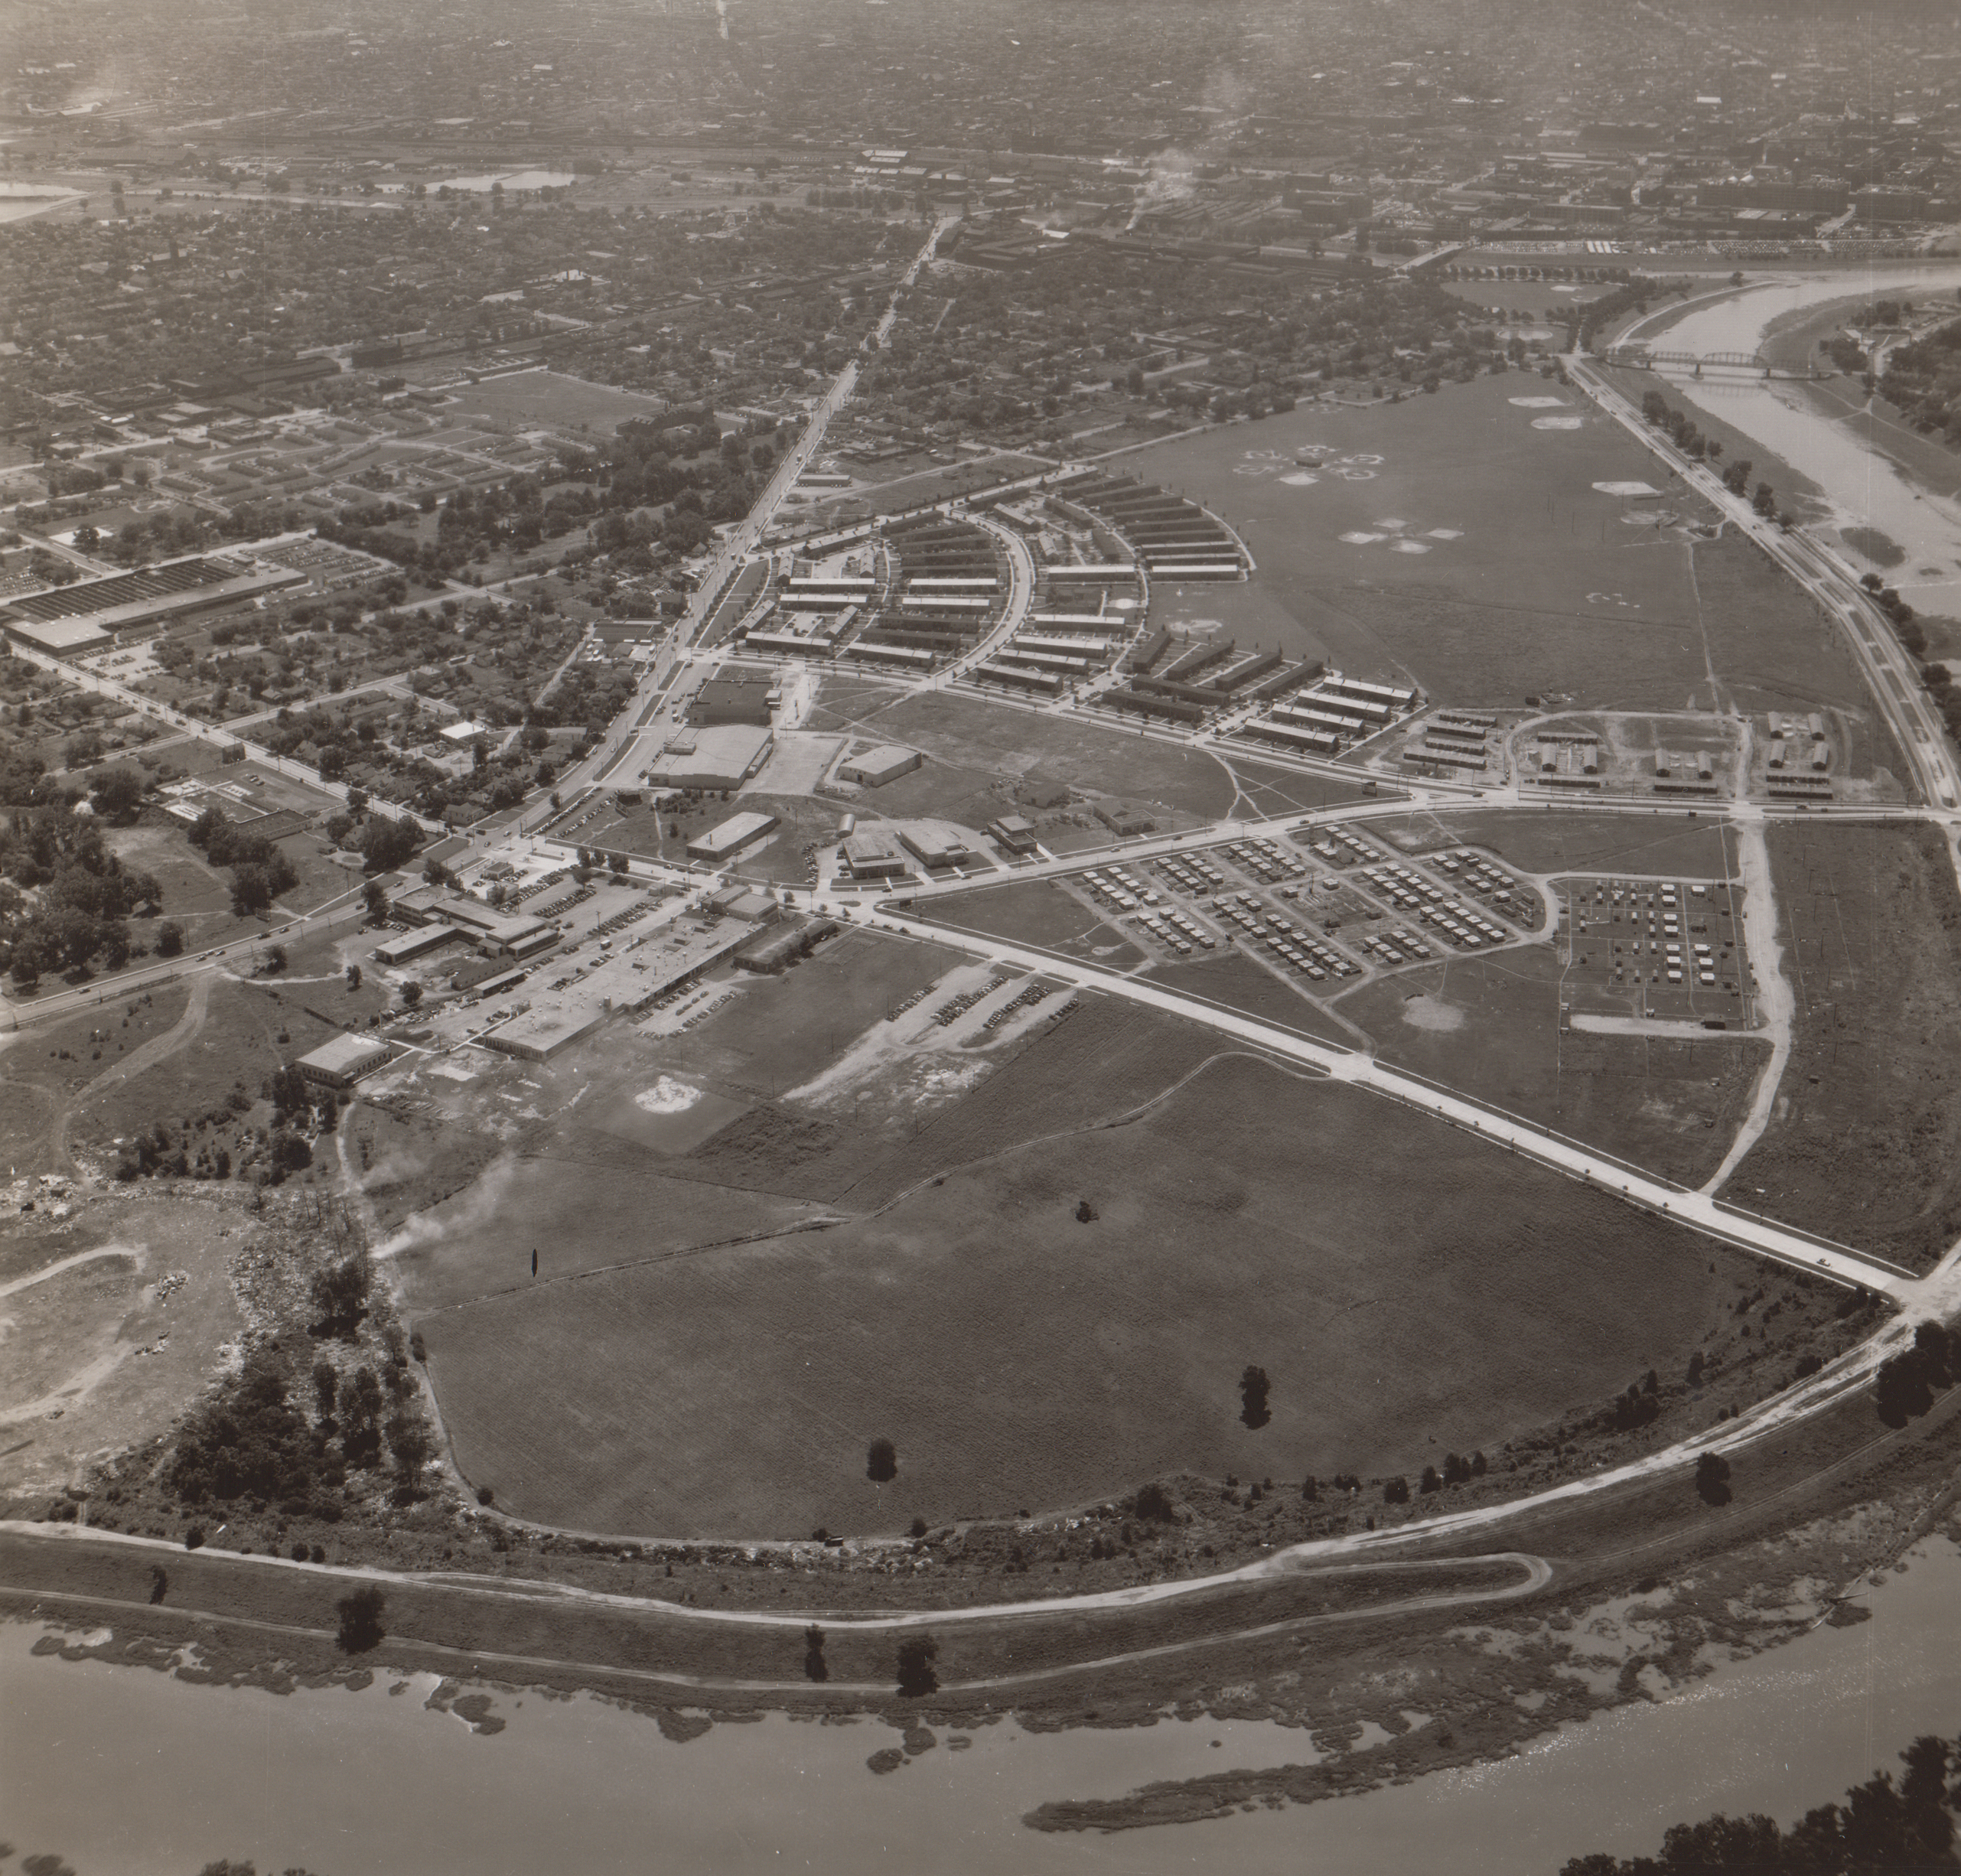 Former site of McCook Field, aerial view, 1947